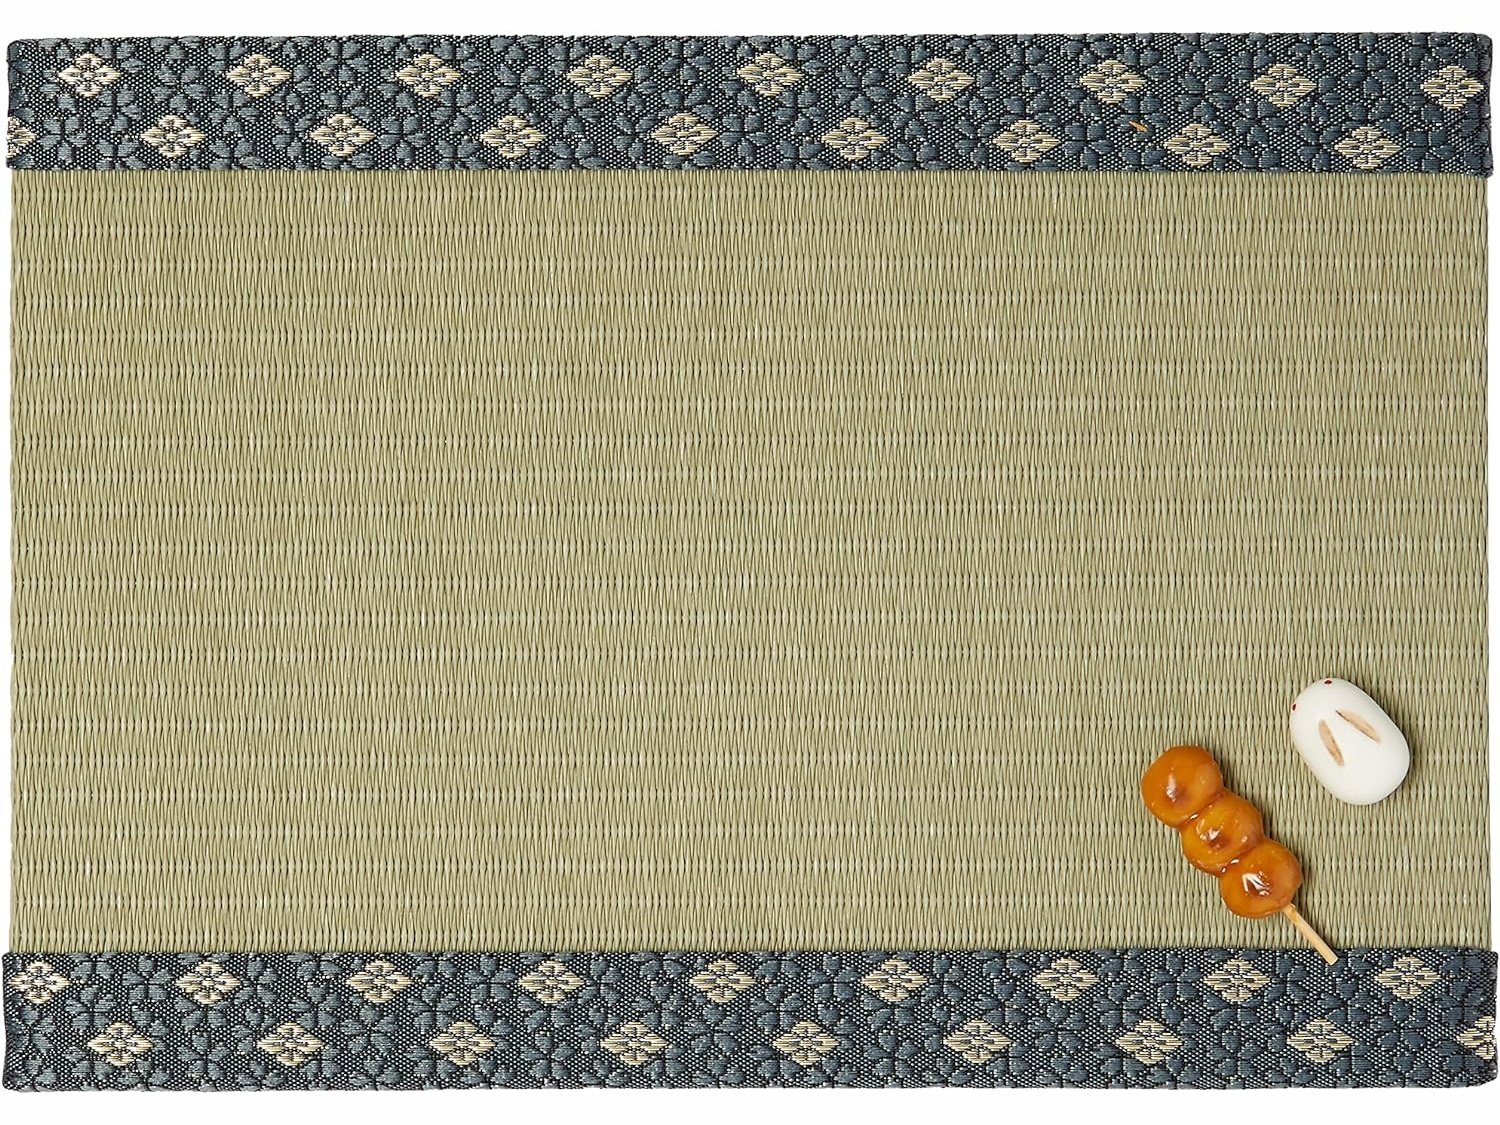 Aruta Tatami A4 Pin Board